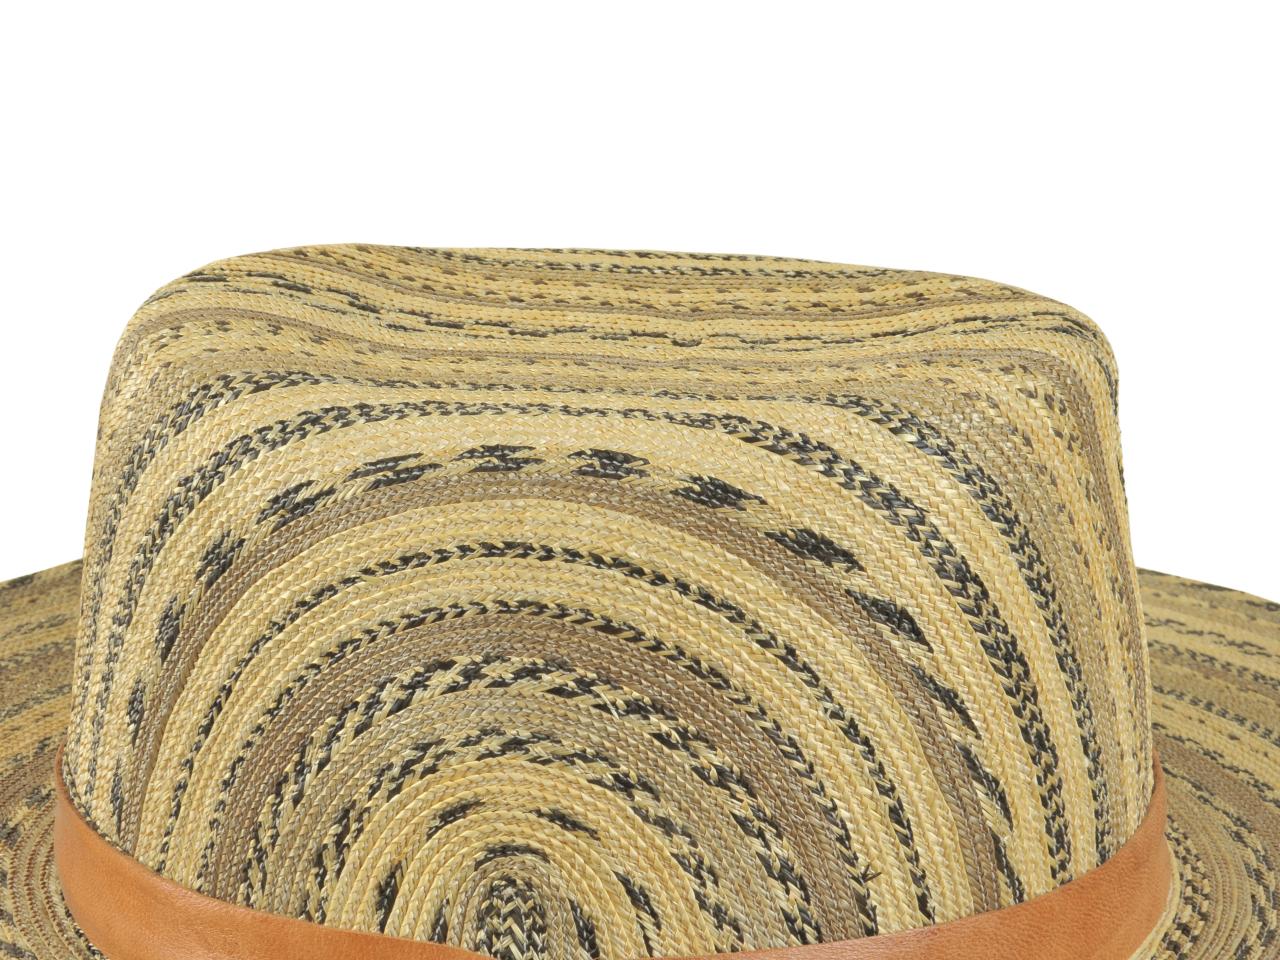 Detalle de sombrero de arco, tejido en paja teatina natural y teñida con tintes naturales